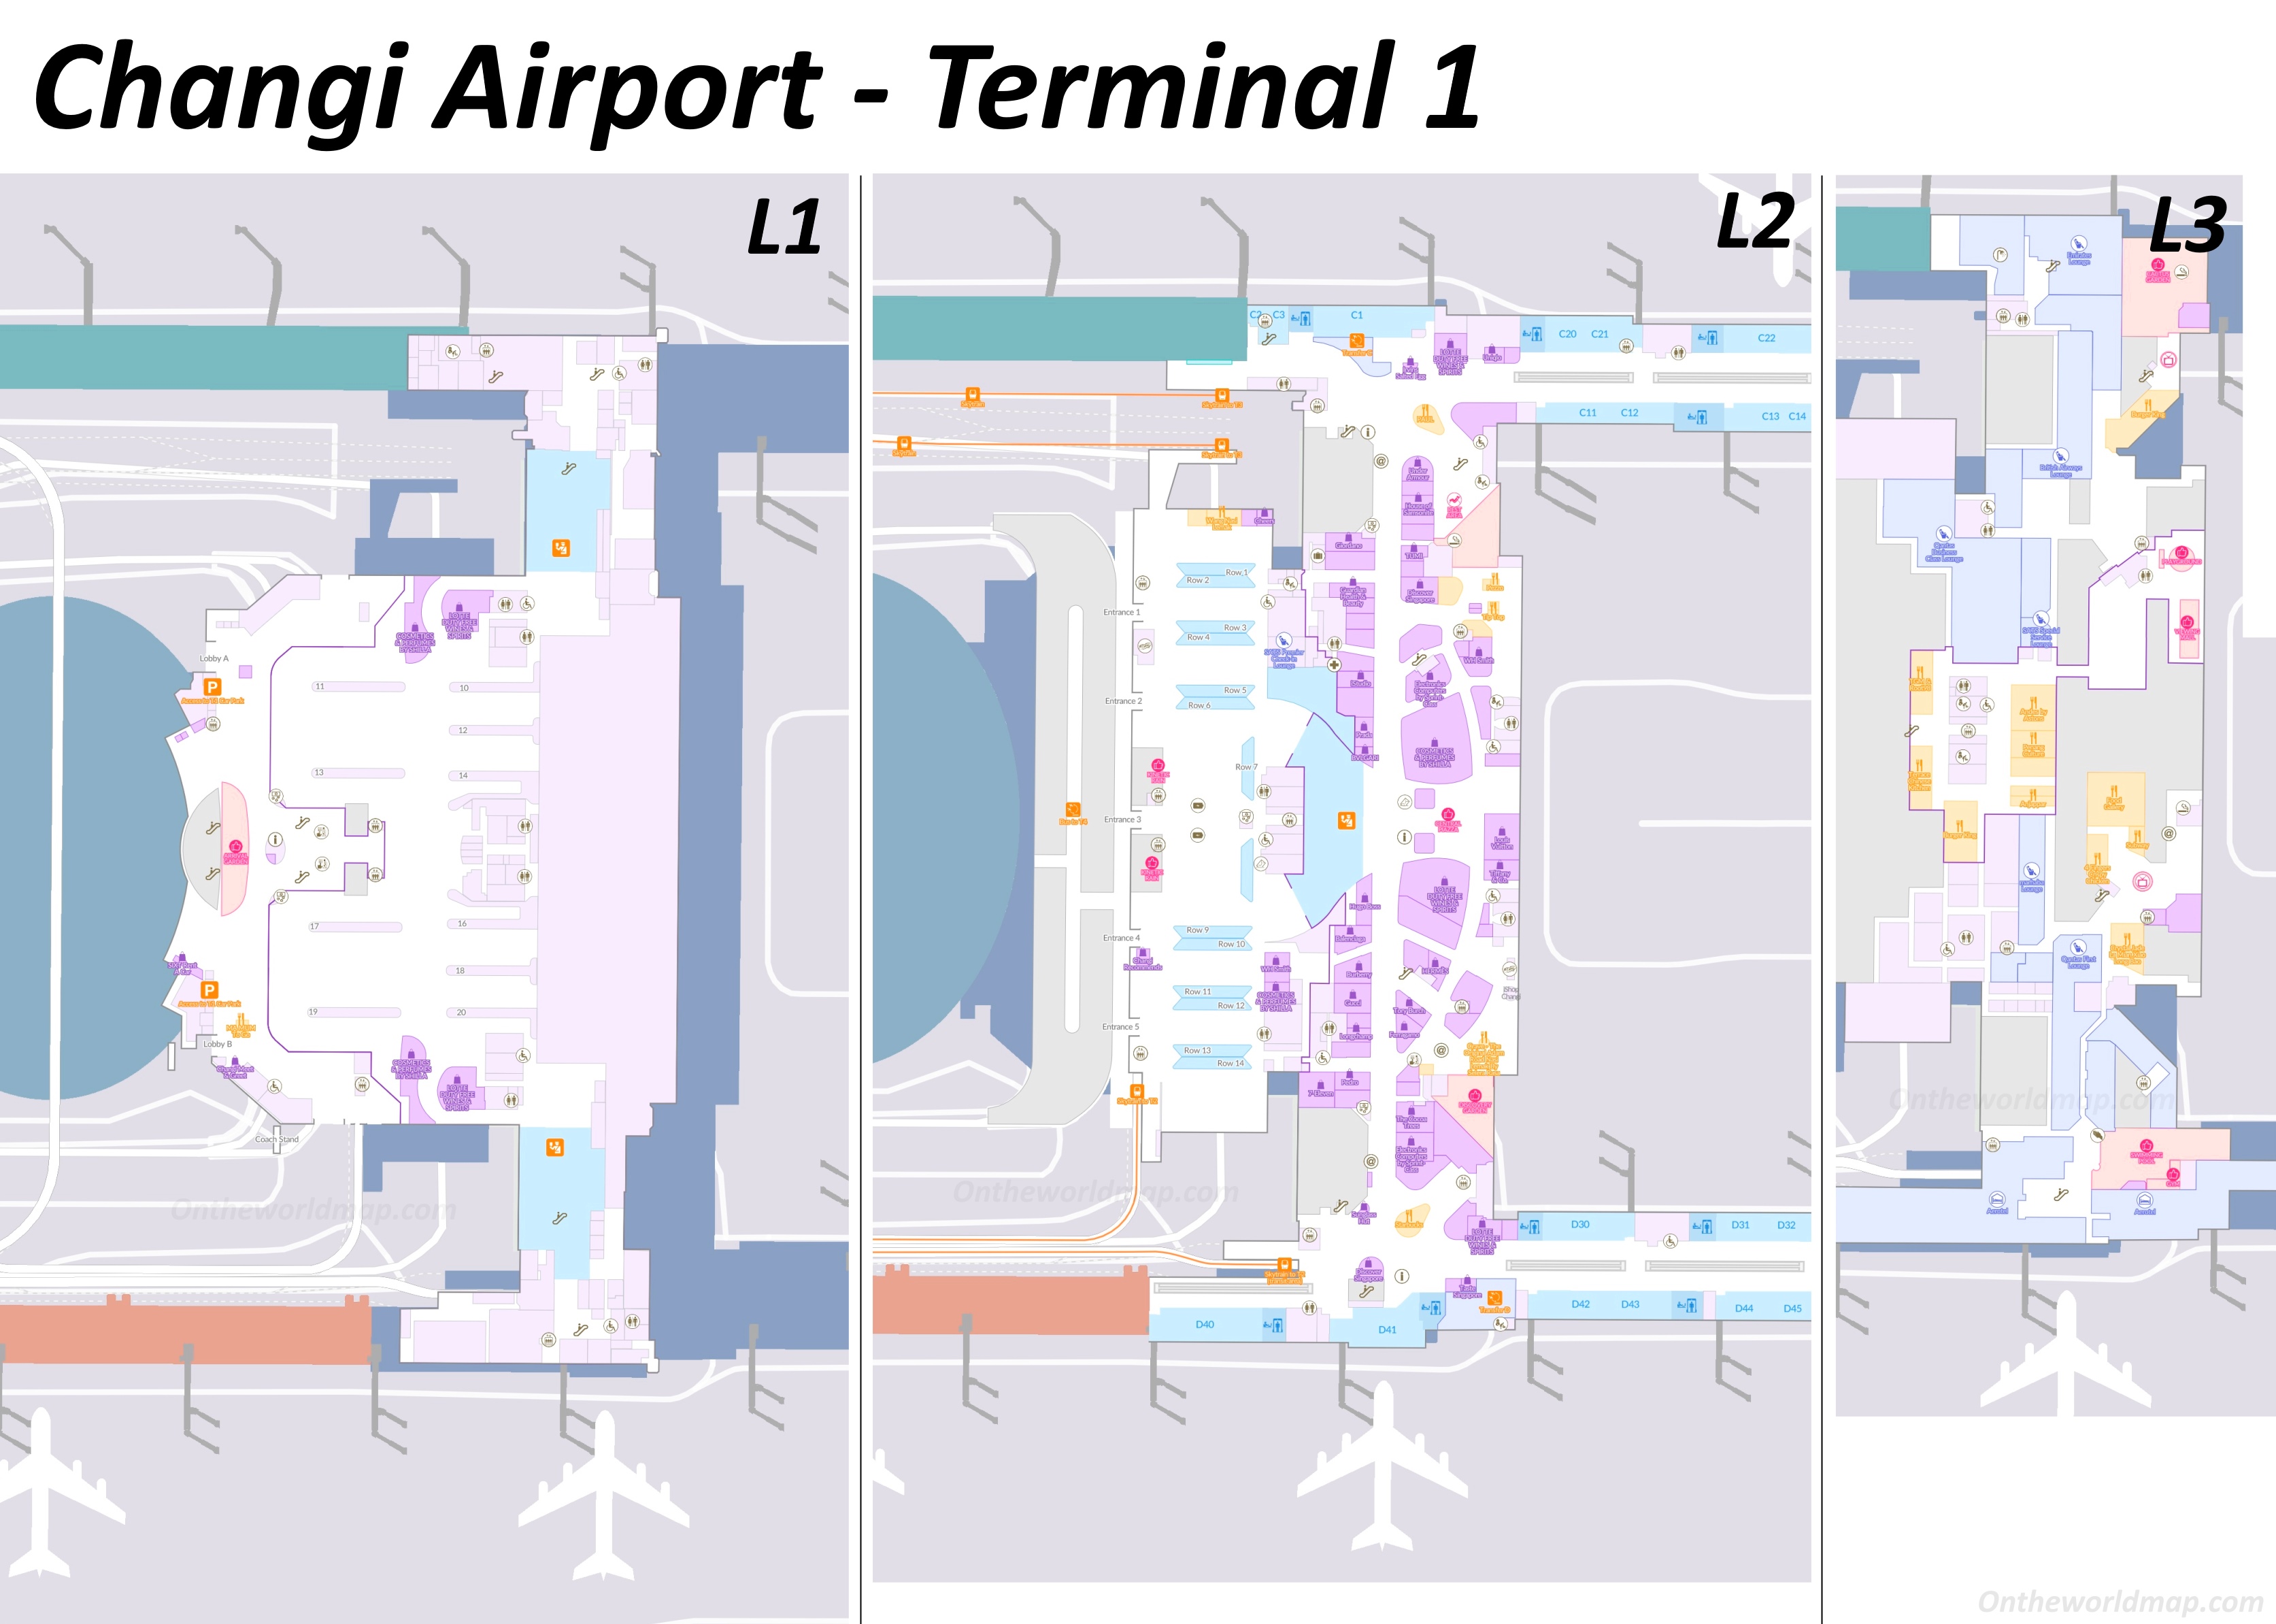 Terminal 1 